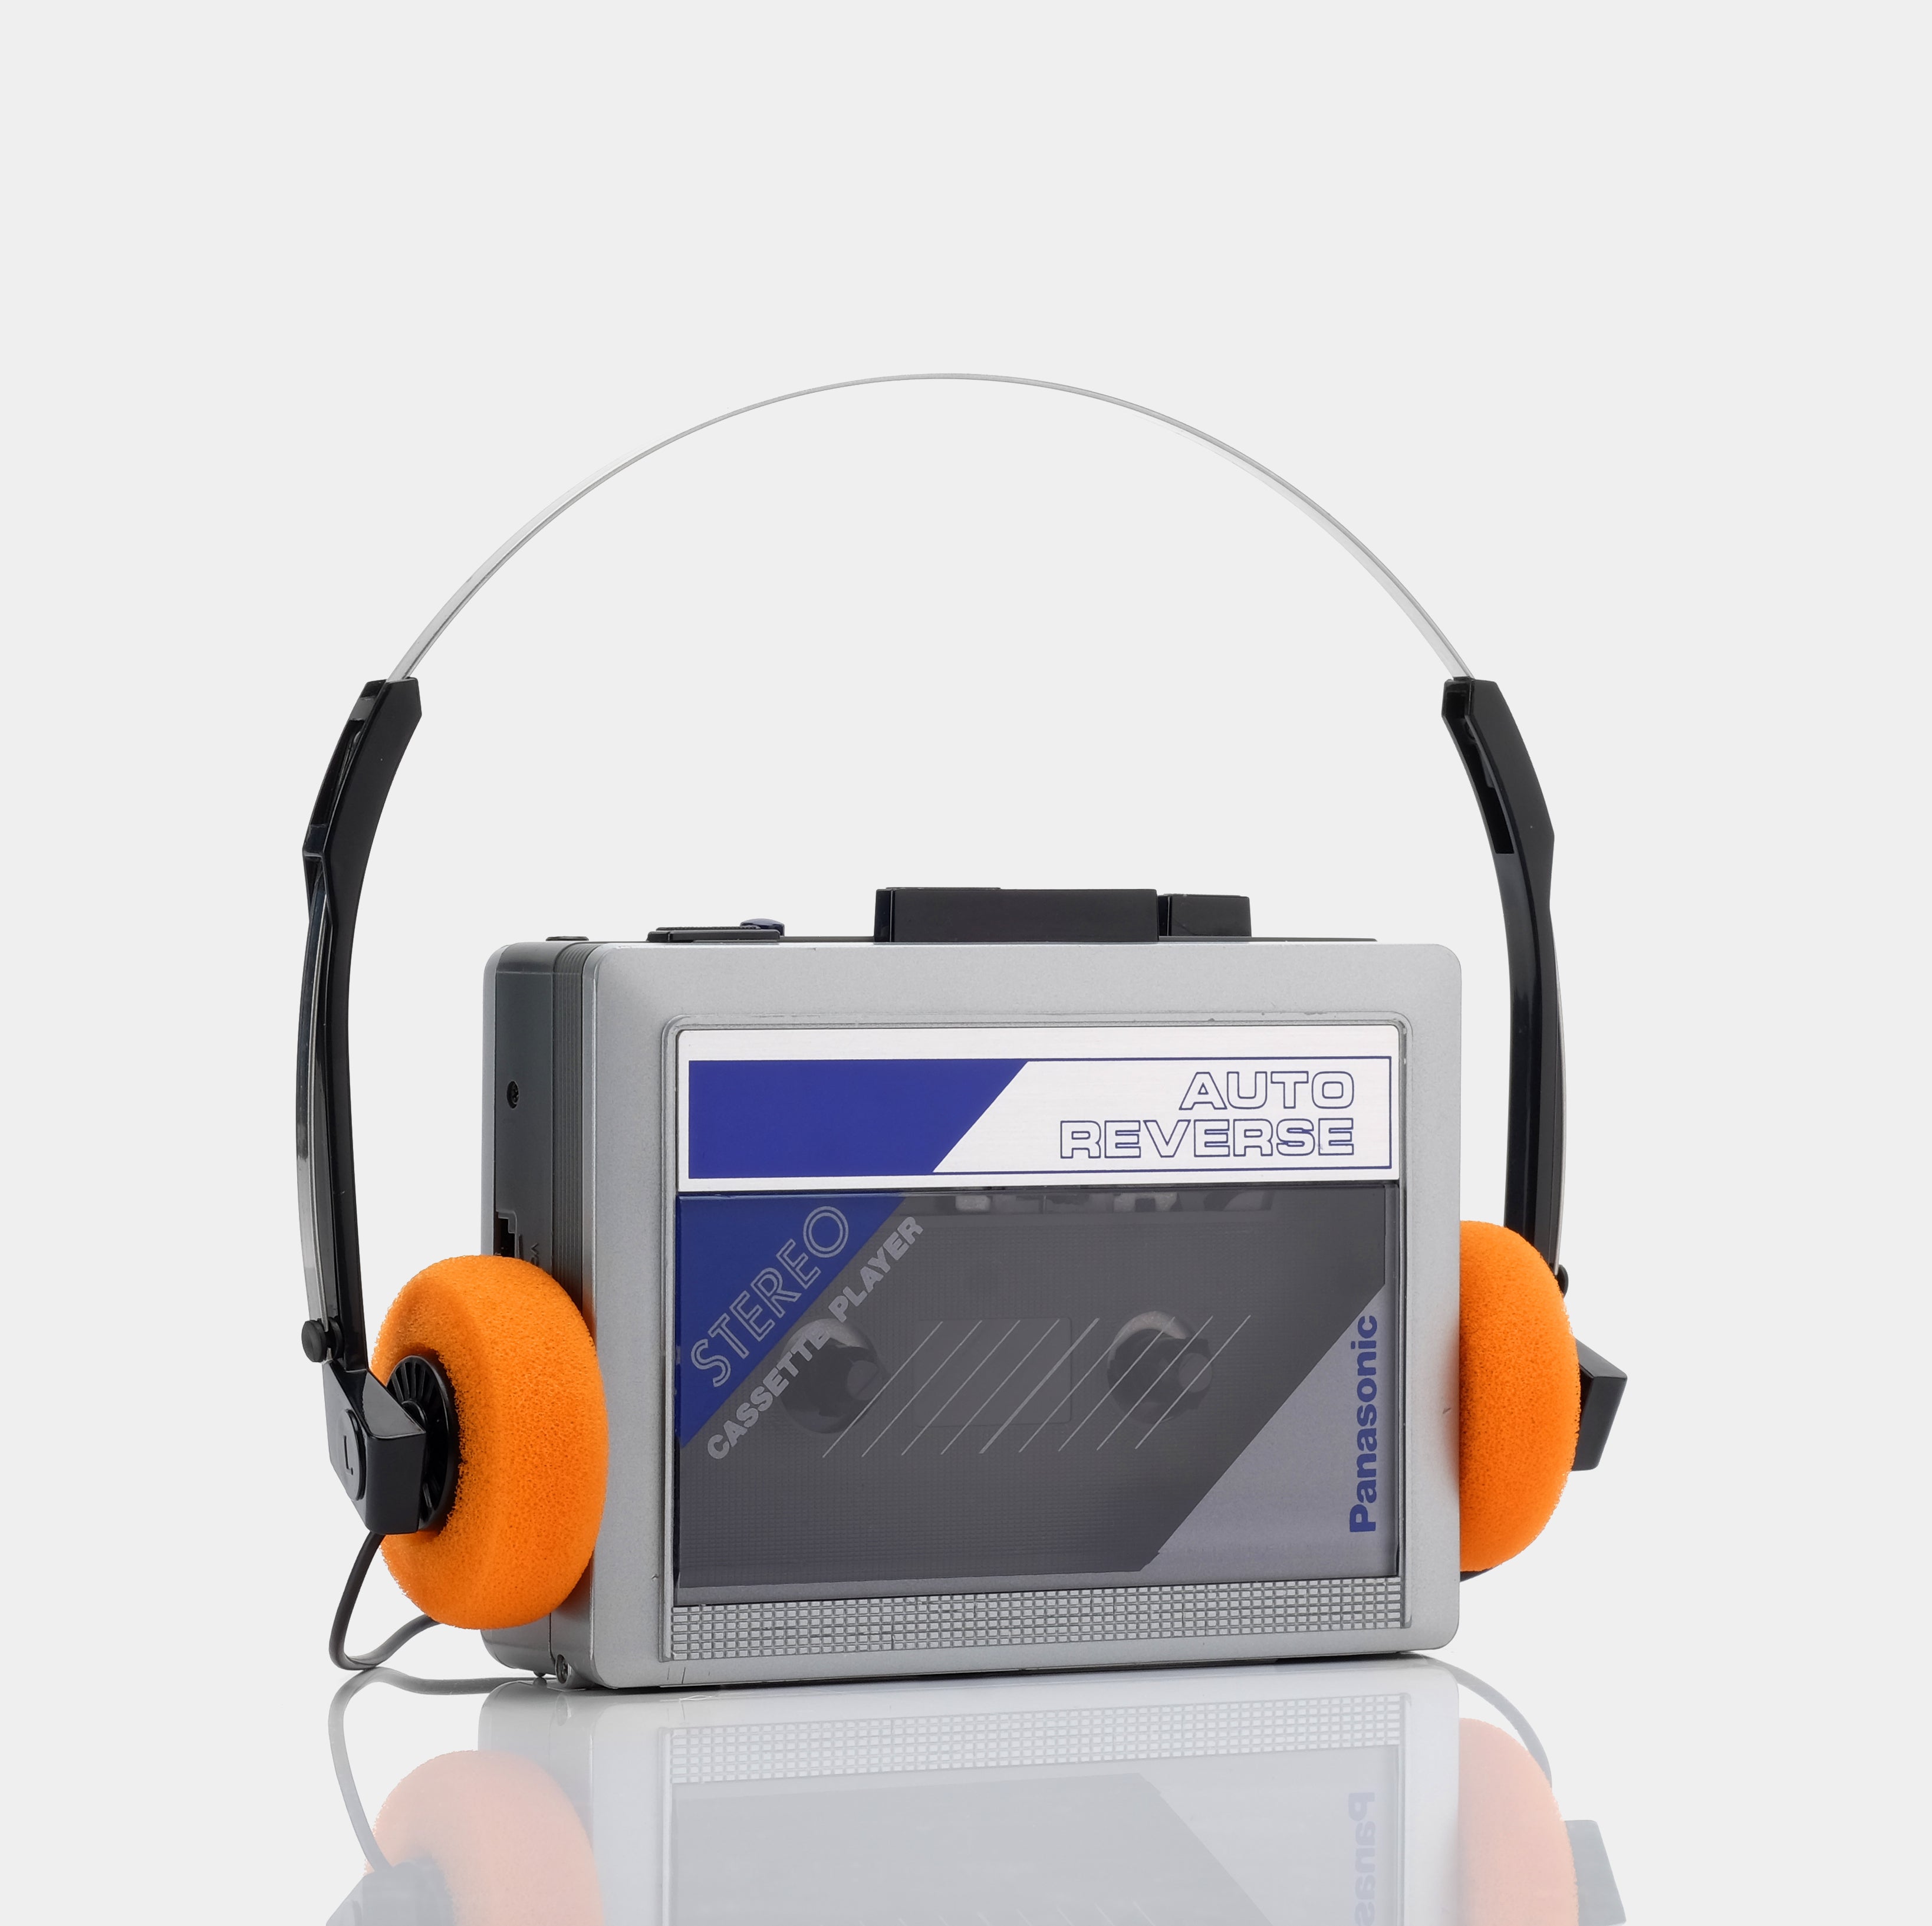 Panasonic RQ-J7 Stereo Auto Reverse AM/FM Portable Cassette Player